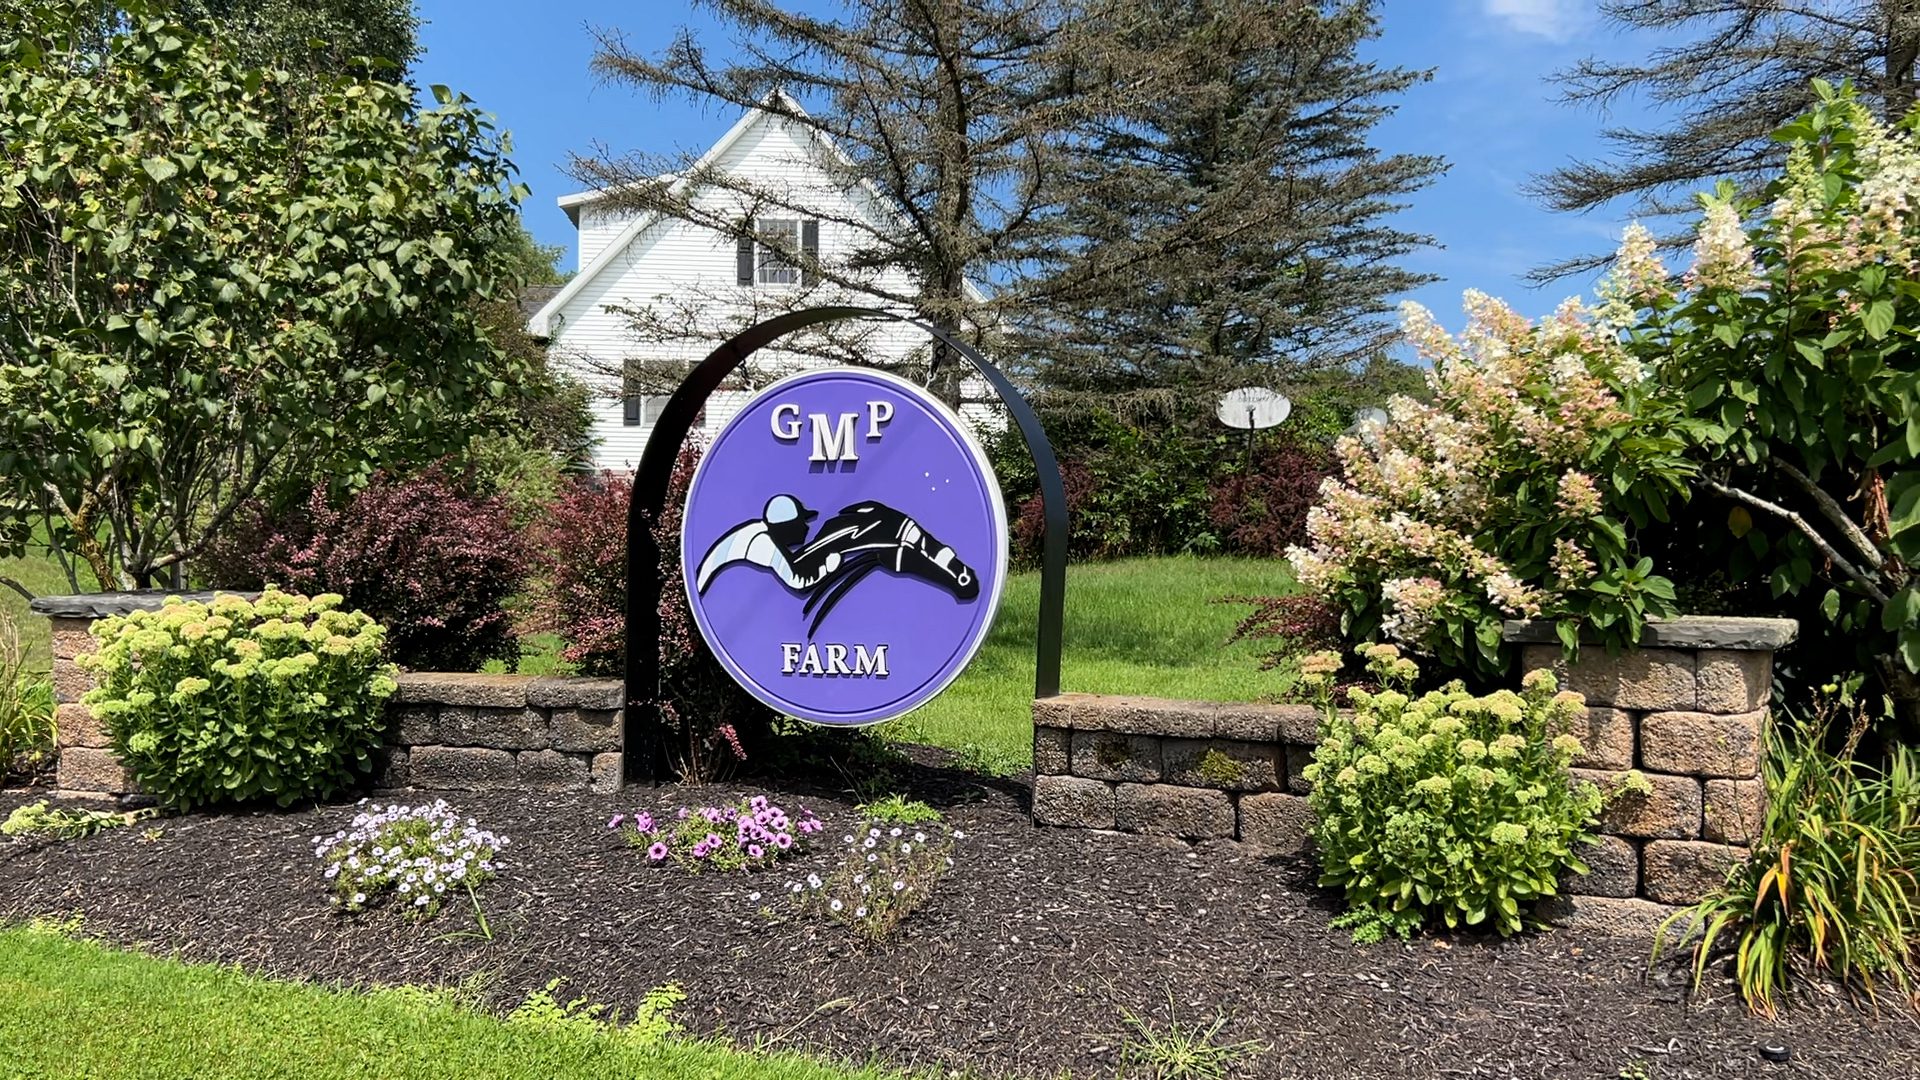 GMP Farm provides equine oasis in New York